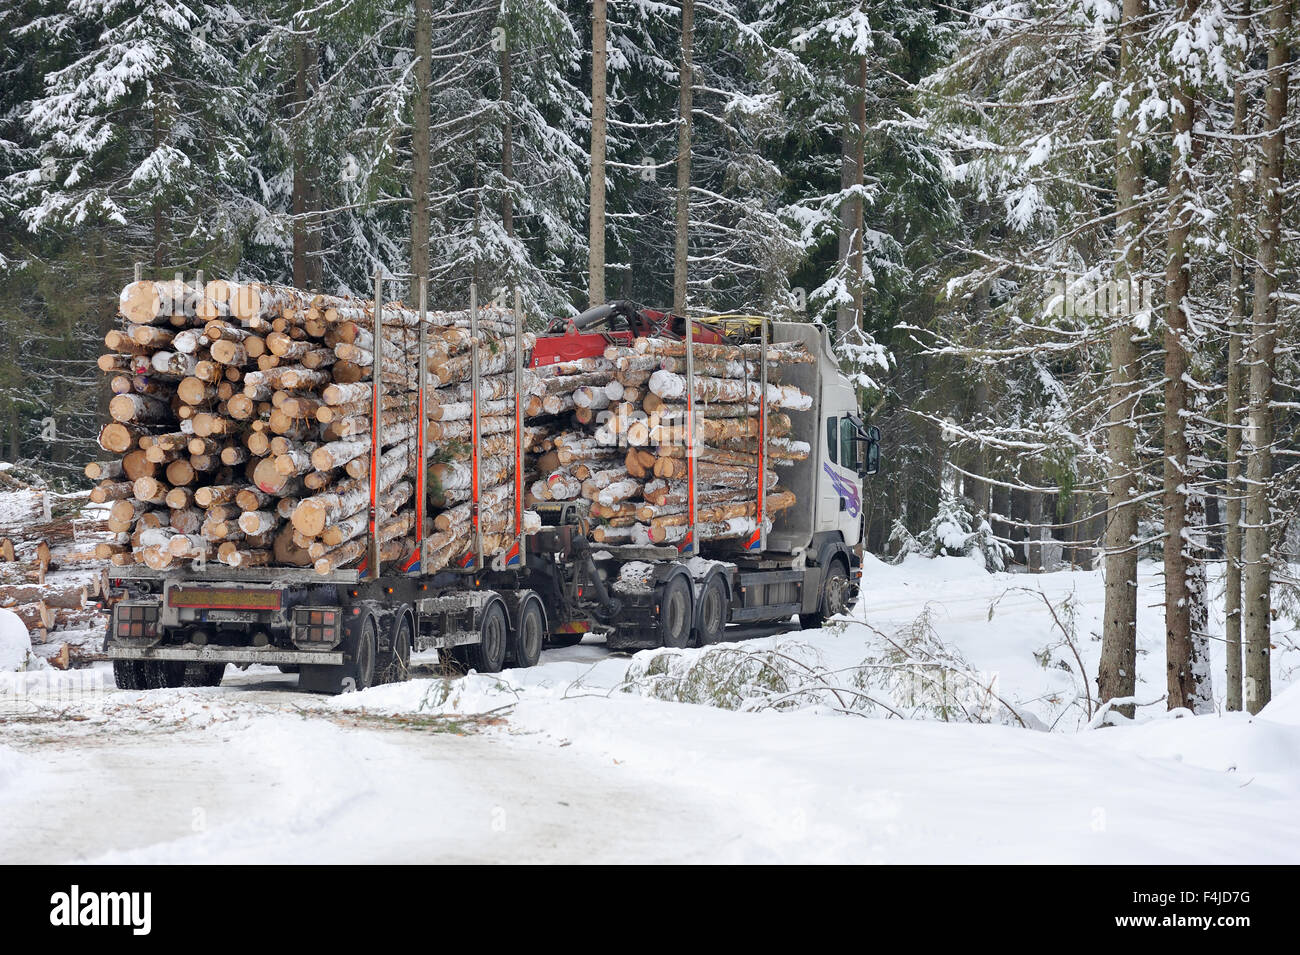 Auto Farbe Bild Wald Industrie Horizontale Forstwirtschaft Bauholz Skandinavien Schweden Transport Lkw Uppland Winter Arbeiten Stockfotografie Alamy